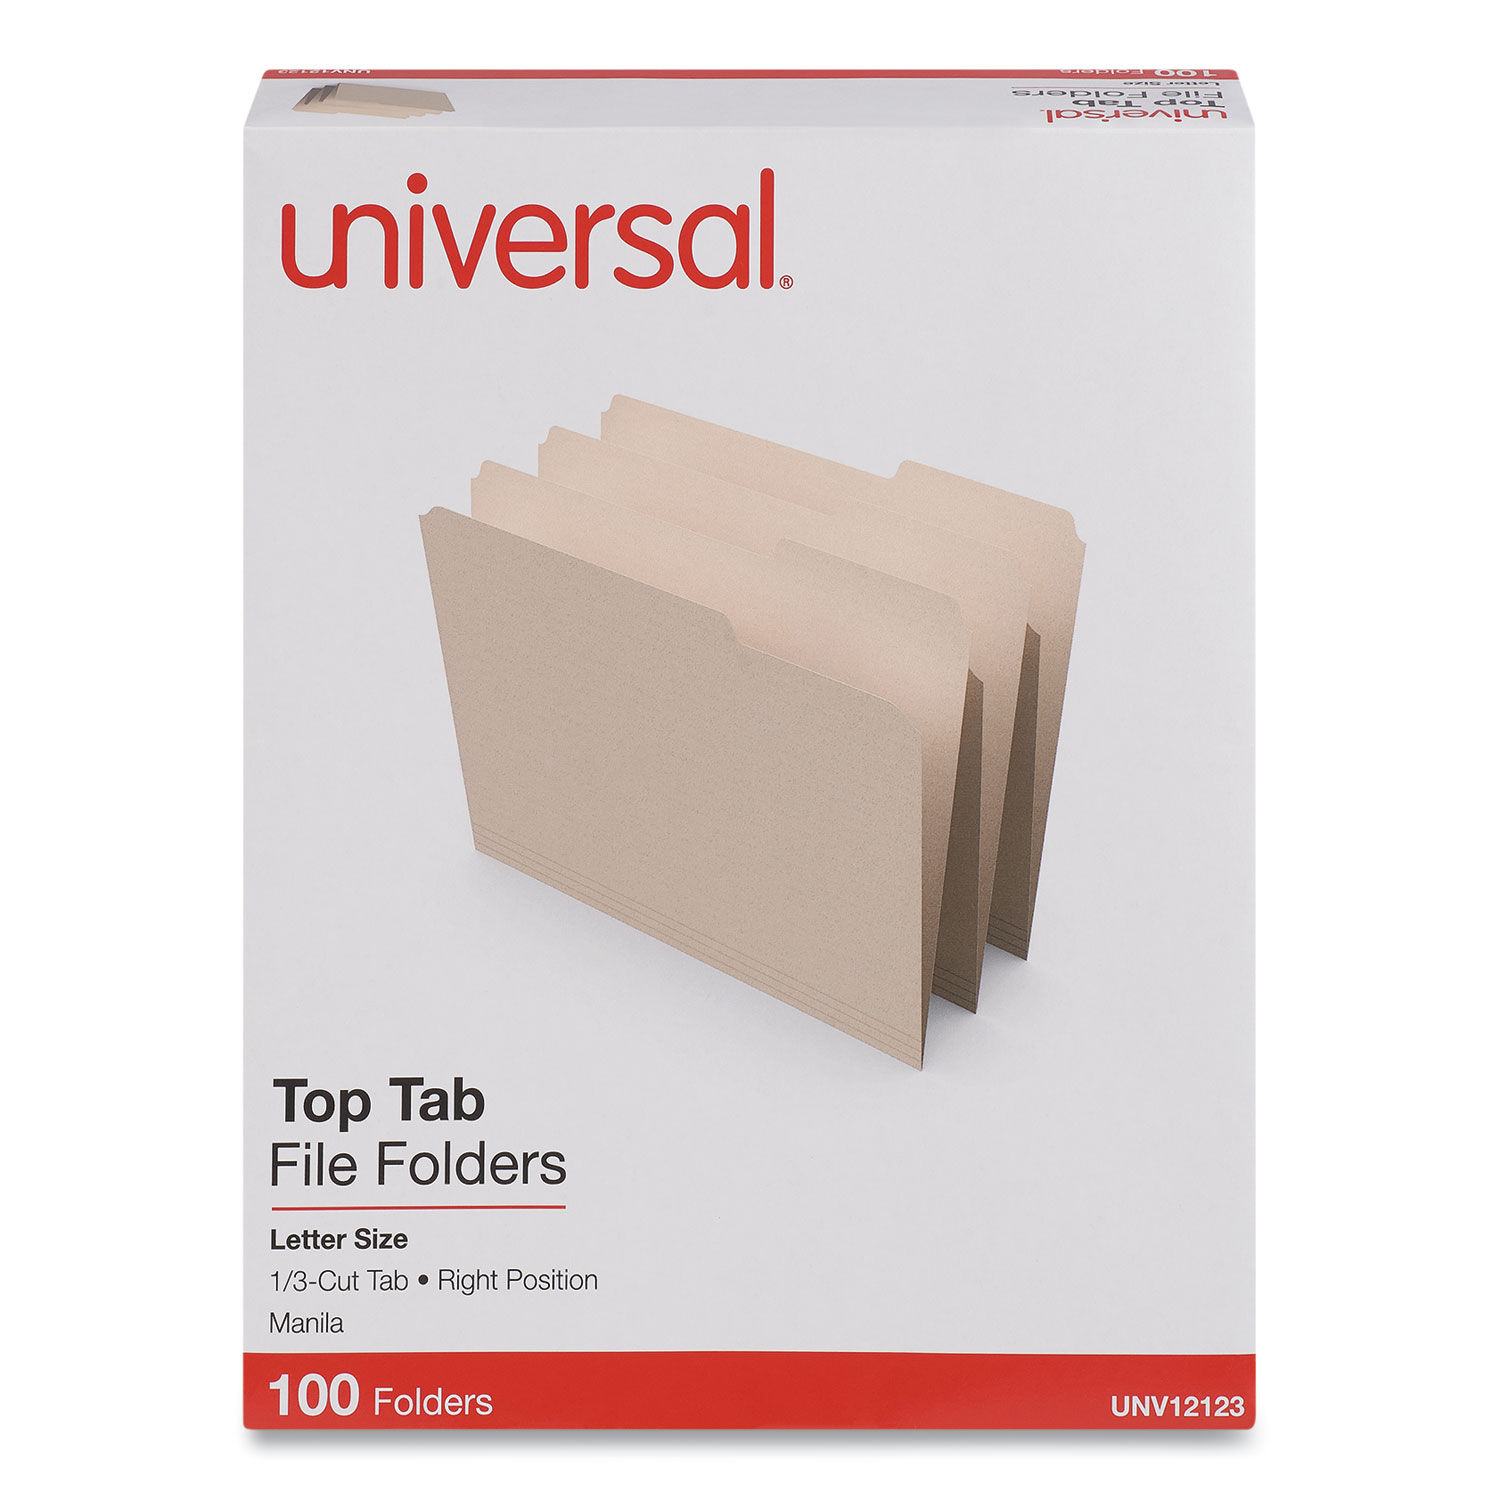 Top Tab File Folders by Universalandreg; UNV12123